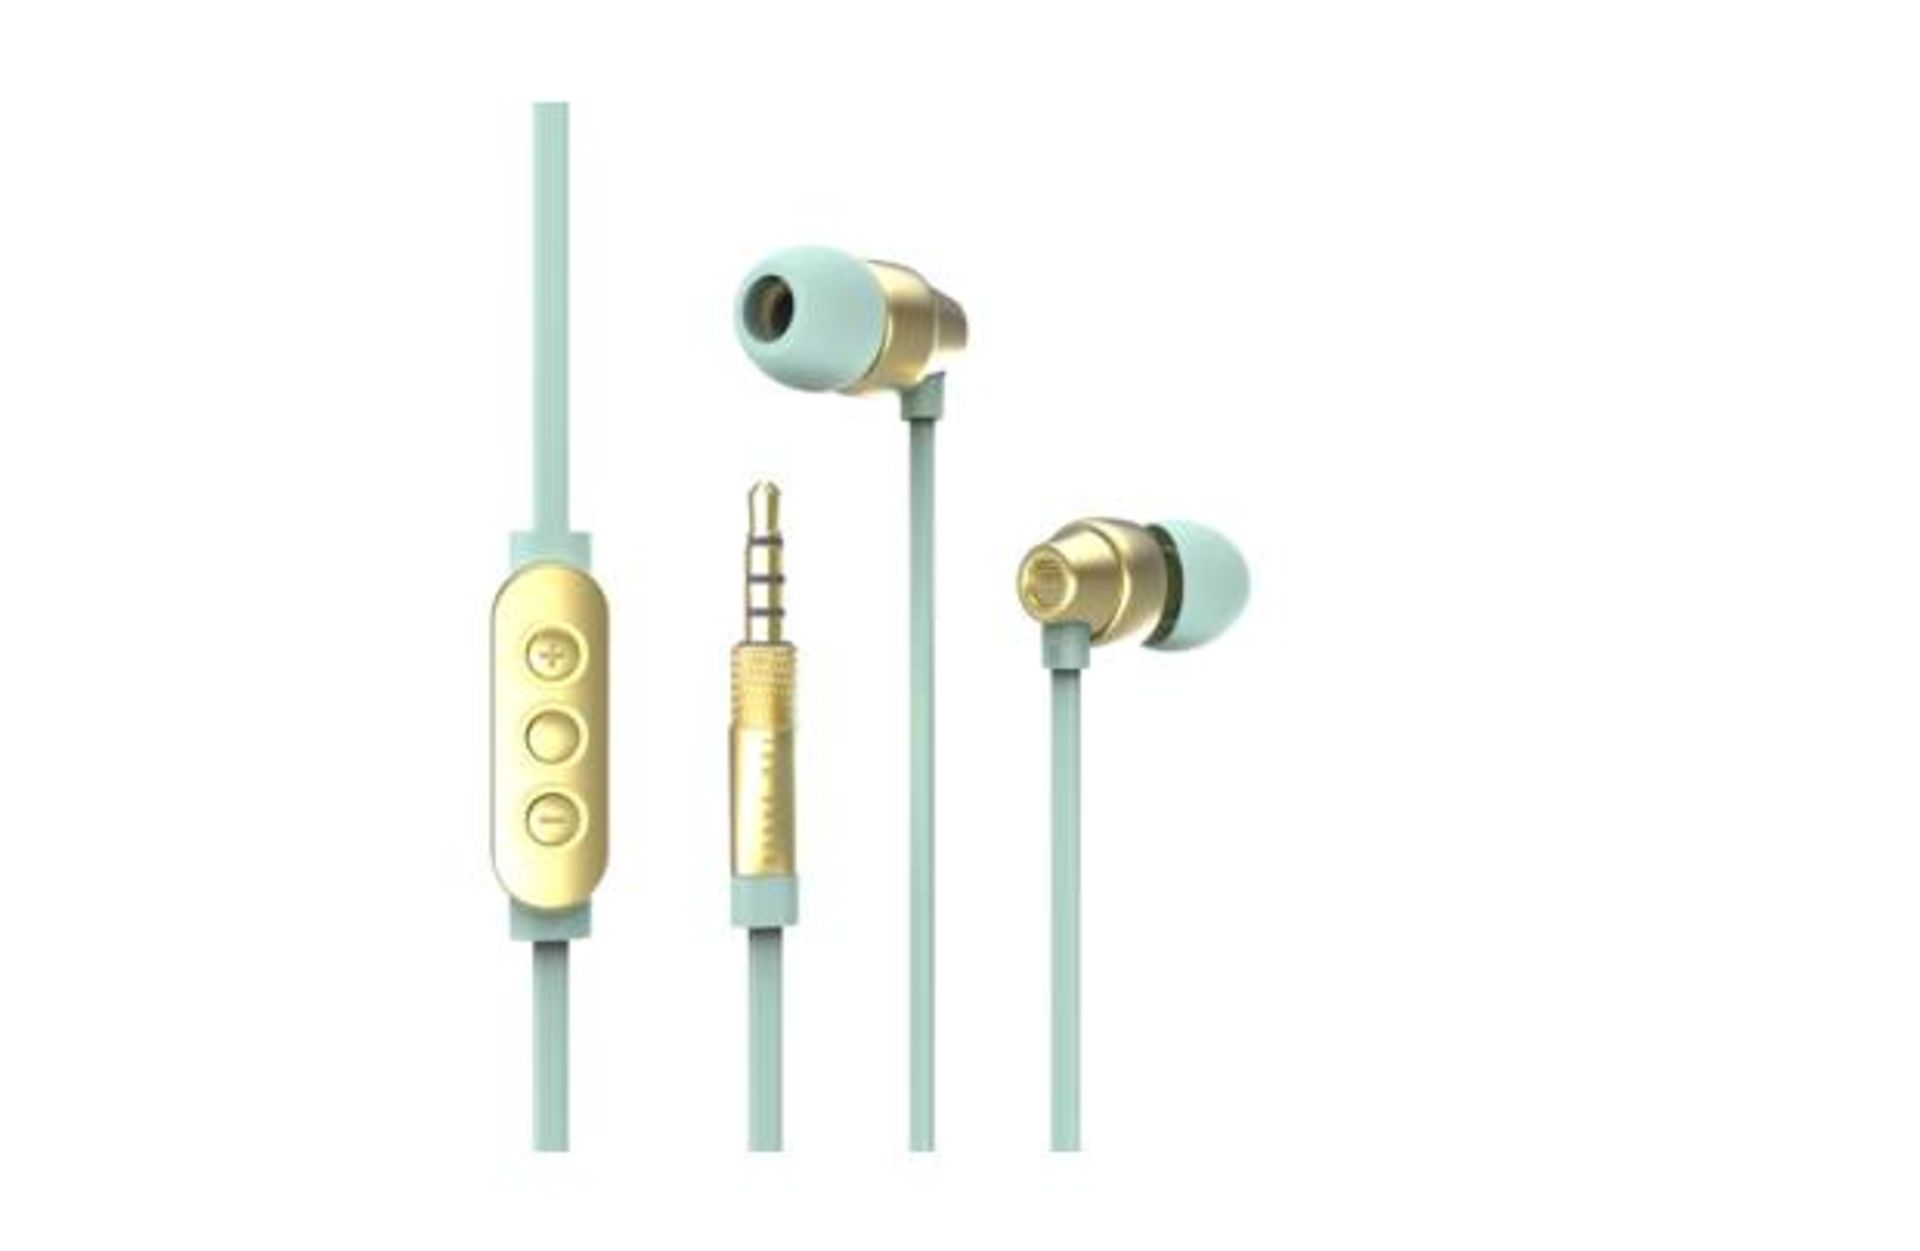 V Brand New Ted Baker Dover In-Ear Headphones - RRP £59.95 - In Mint/Gold - ISP £39.99 (Ebay) - Image 2 of 2